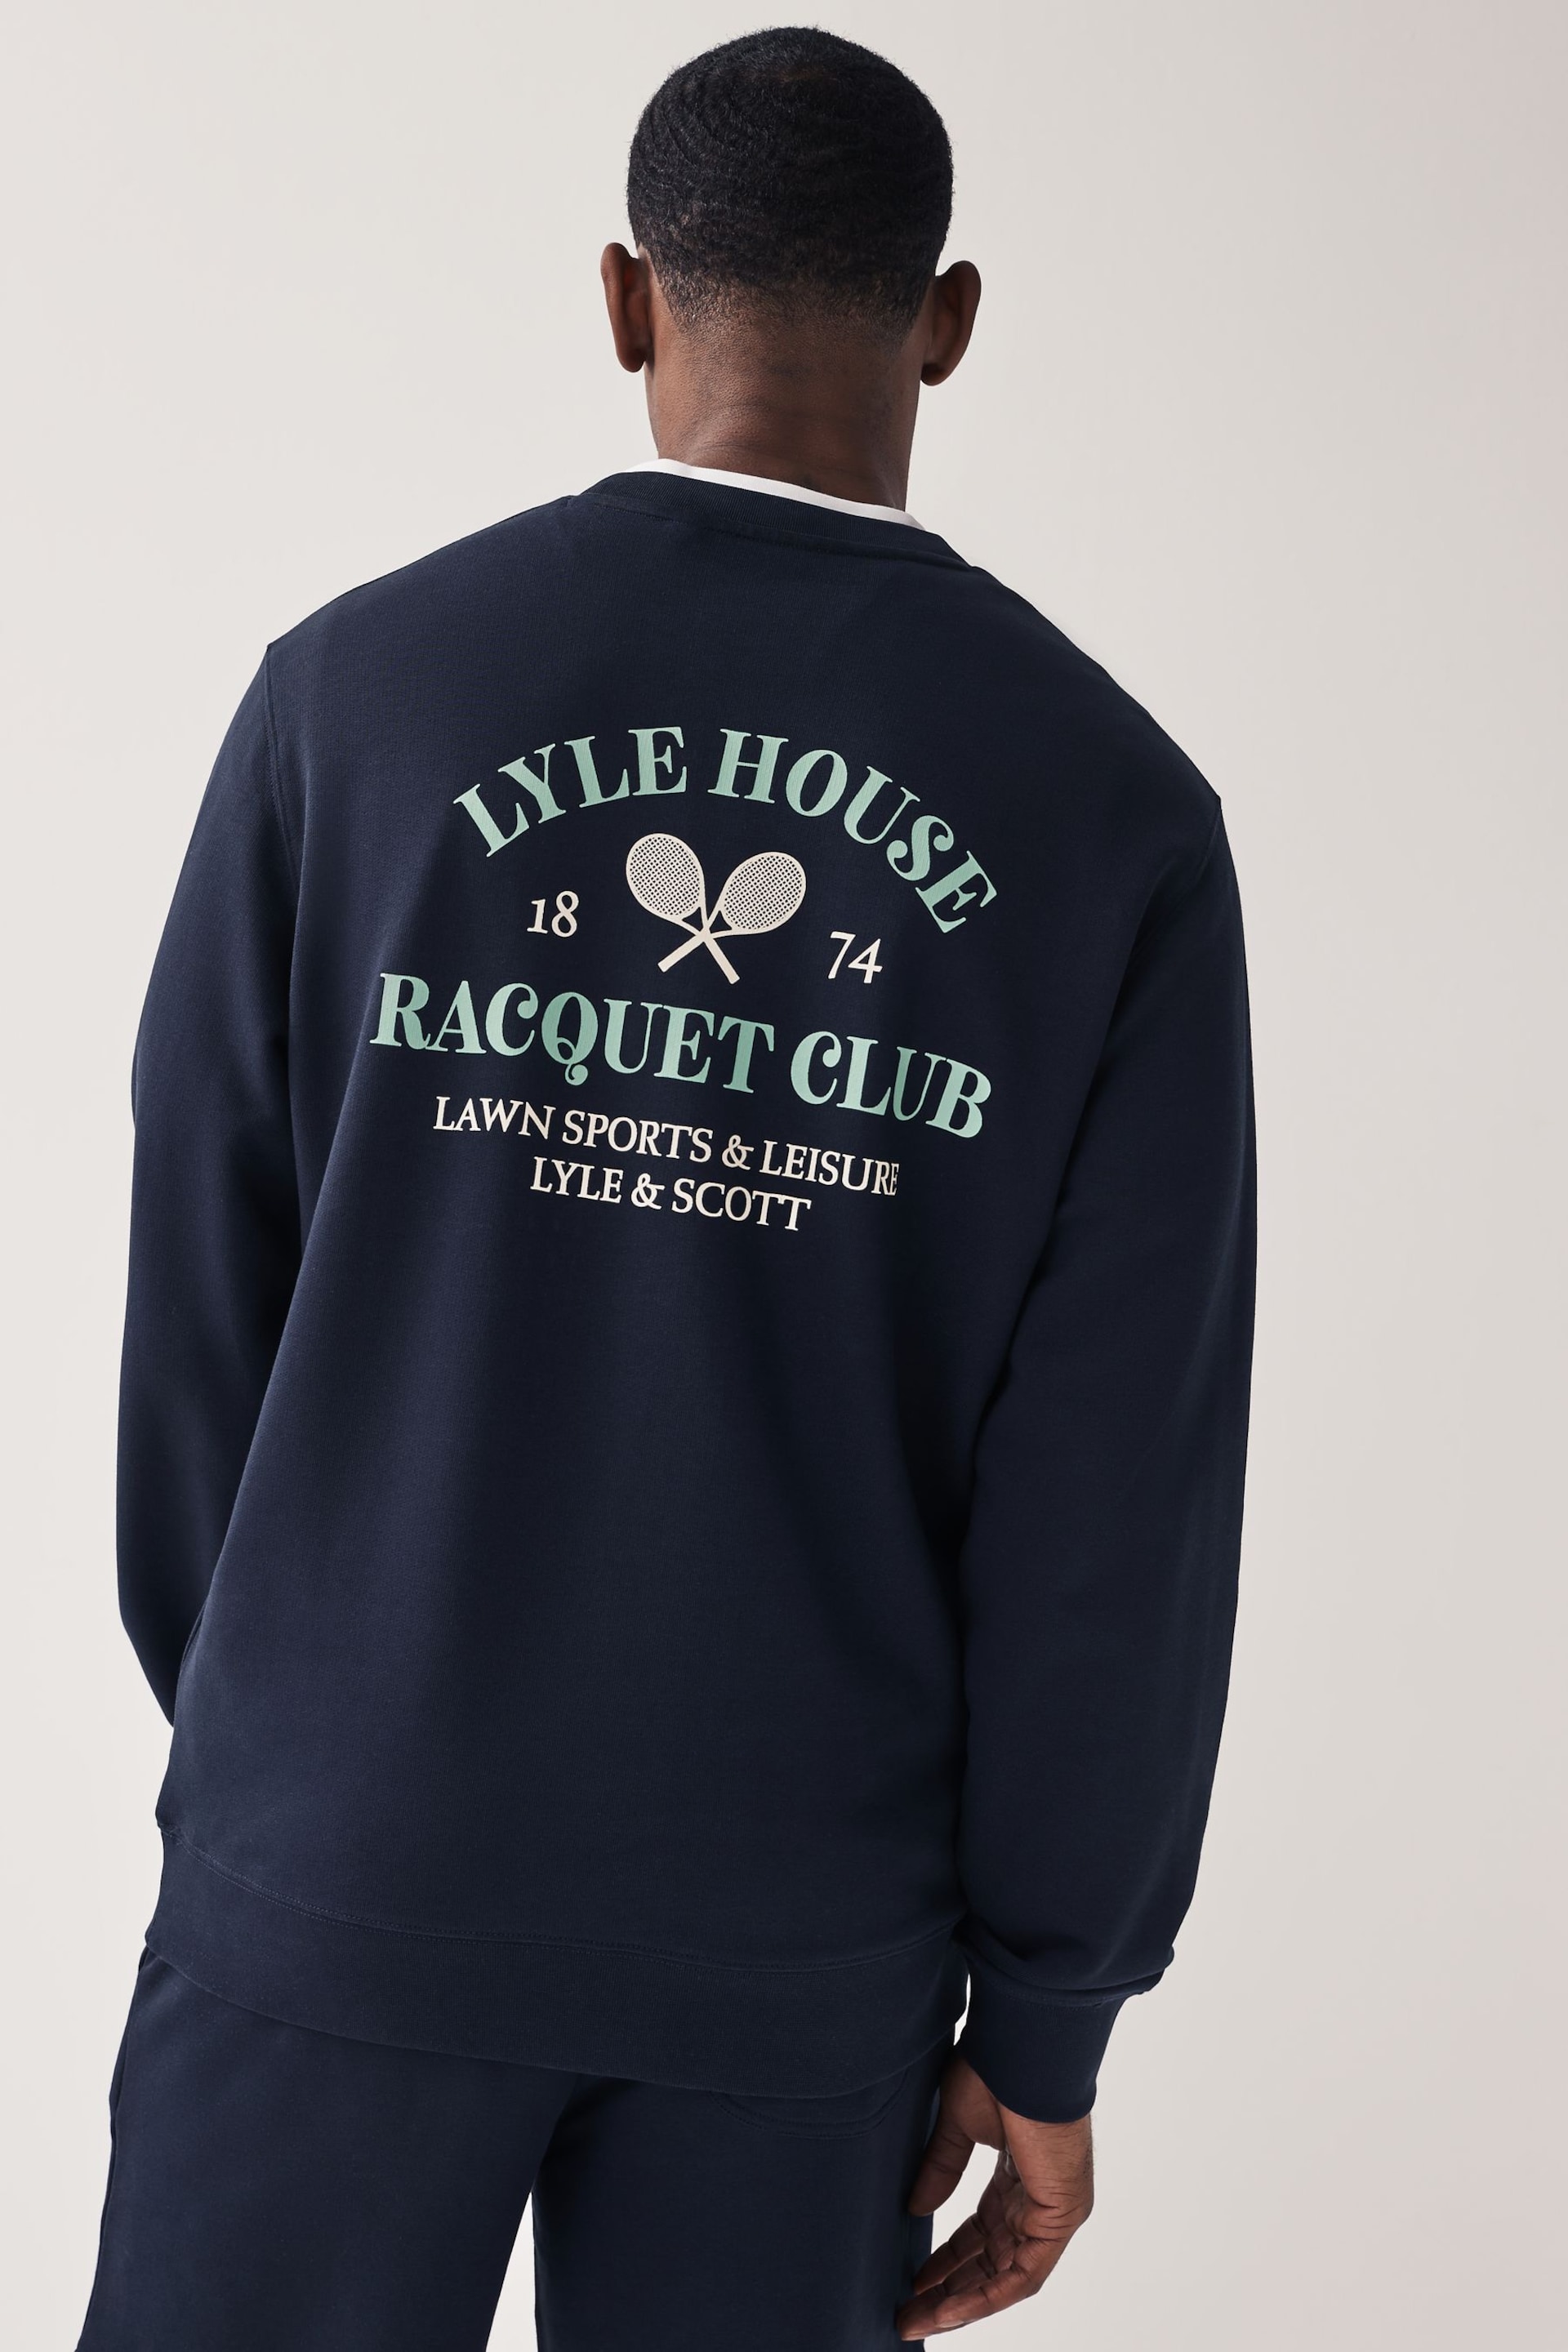 Lyle & Scott Racquet Club Graphic Back Print Sweatshirt - Image 3 of 5